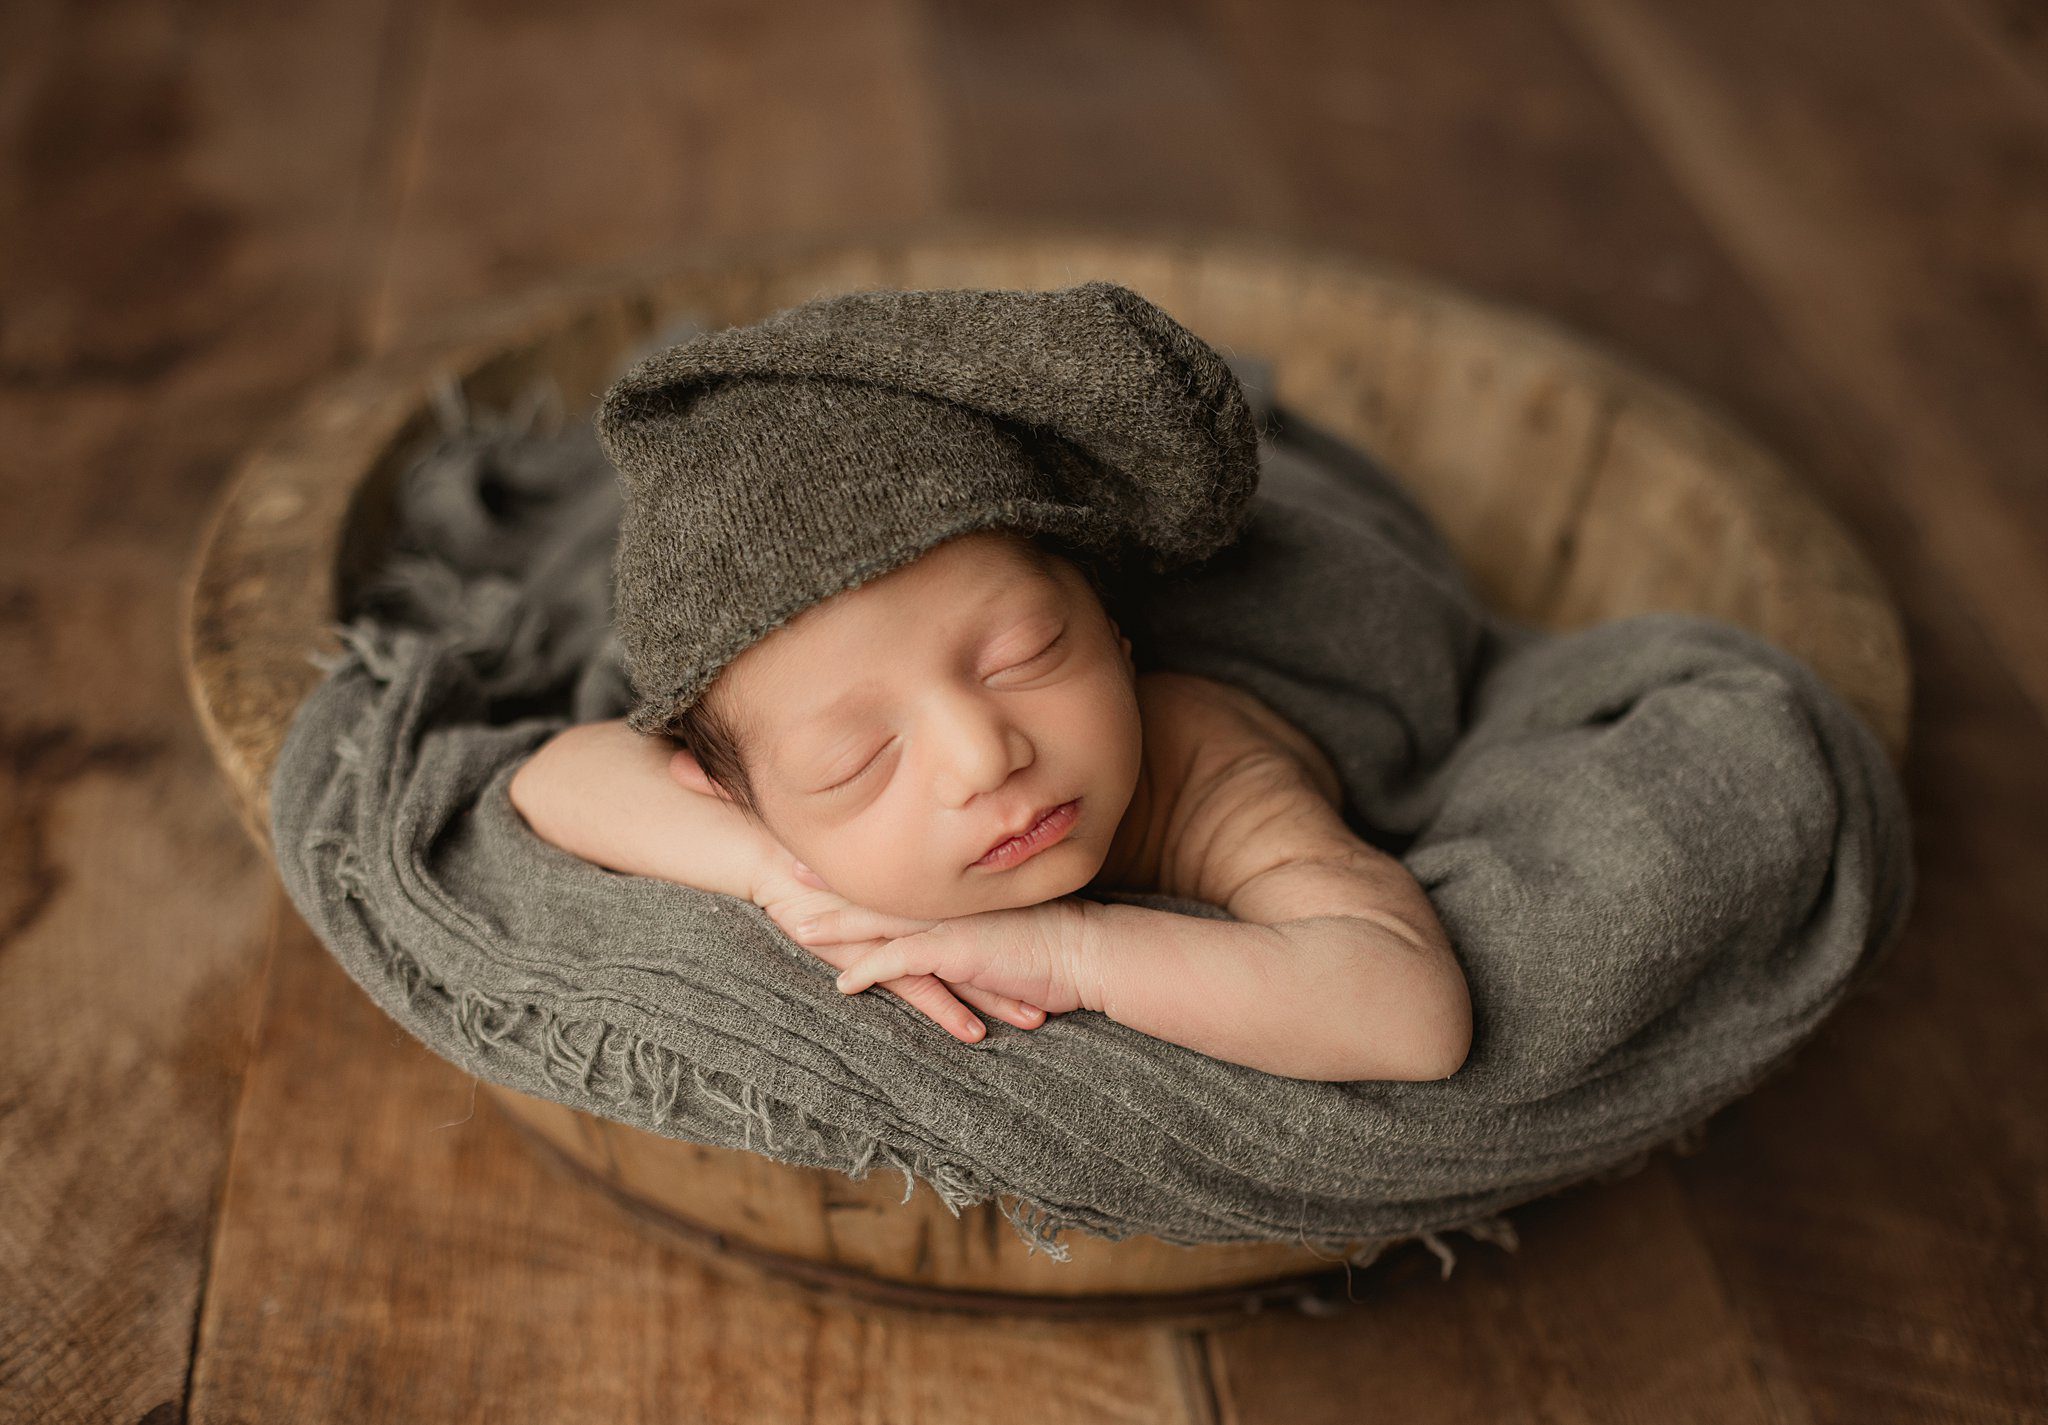 A newborn baby sleeps in a wooden bowl wearing a knit night cap